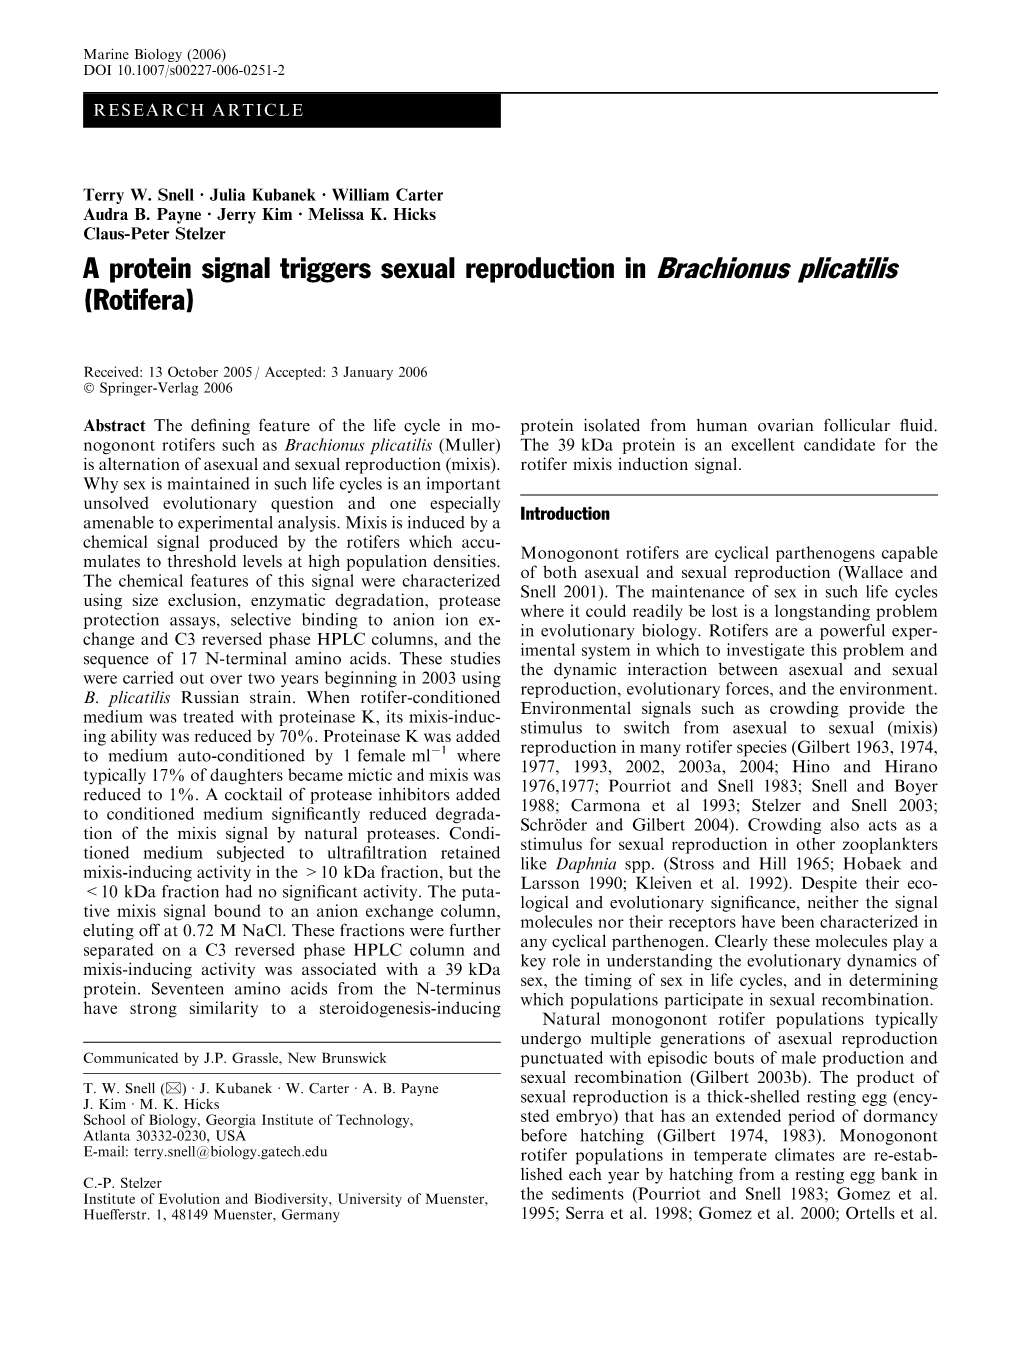 A Protein Signal Triggers Sexual Reproduction in Brachionus Plicatilis (Rotifera)